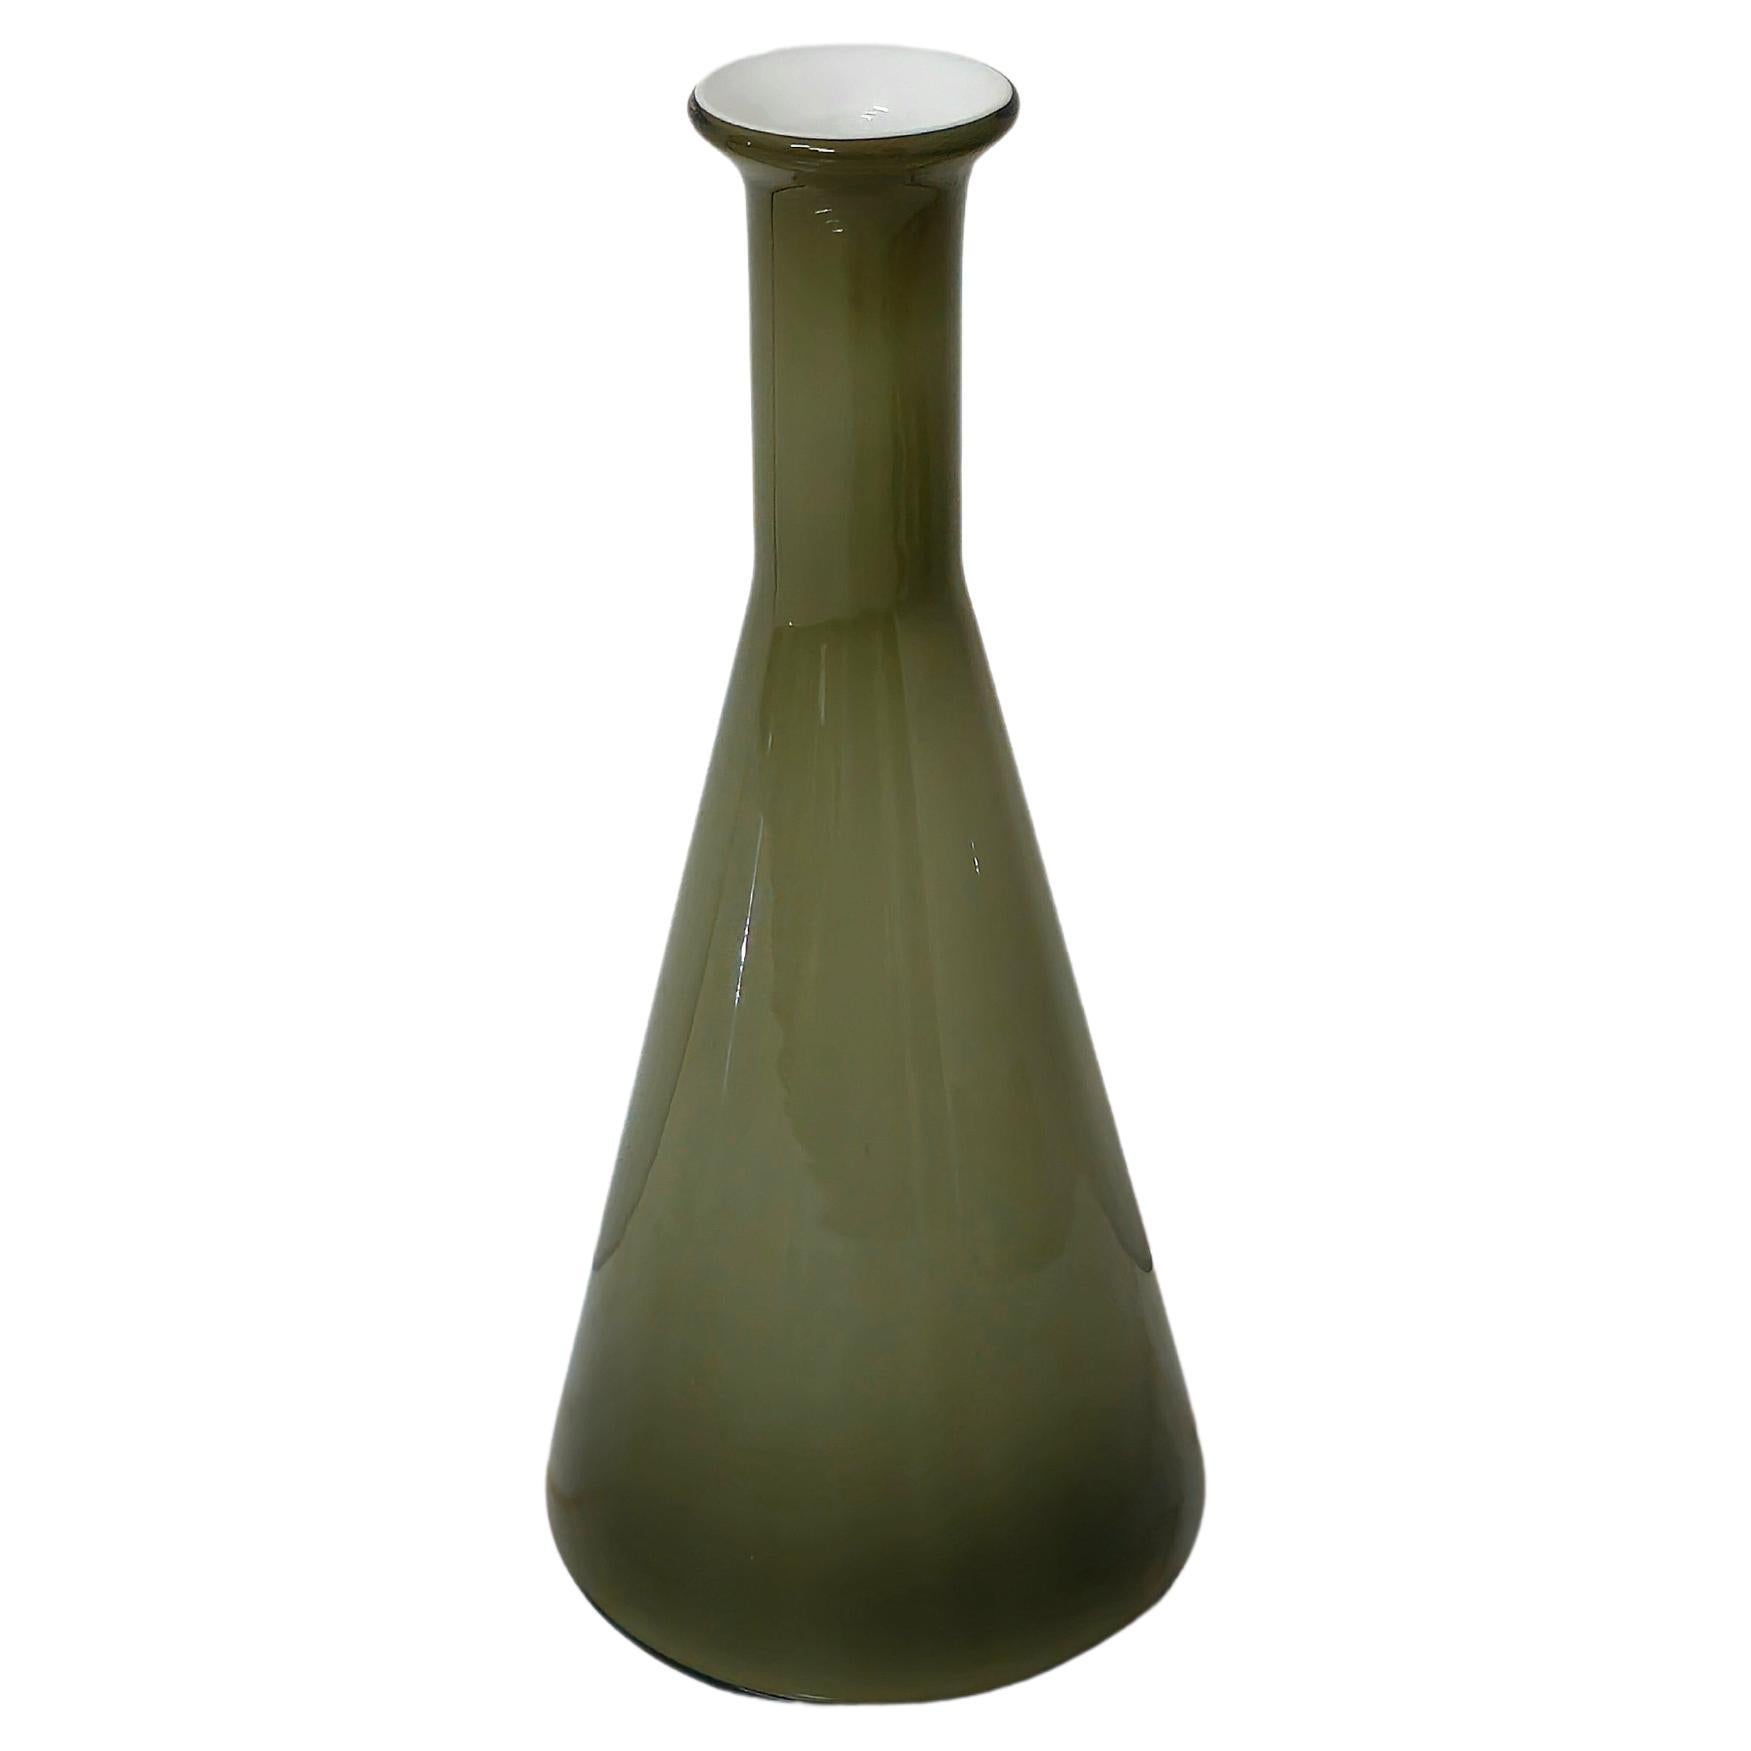 Vase Decorative Object Murano Glass Green Midcentury Modern Italian Design 1960s For Sale